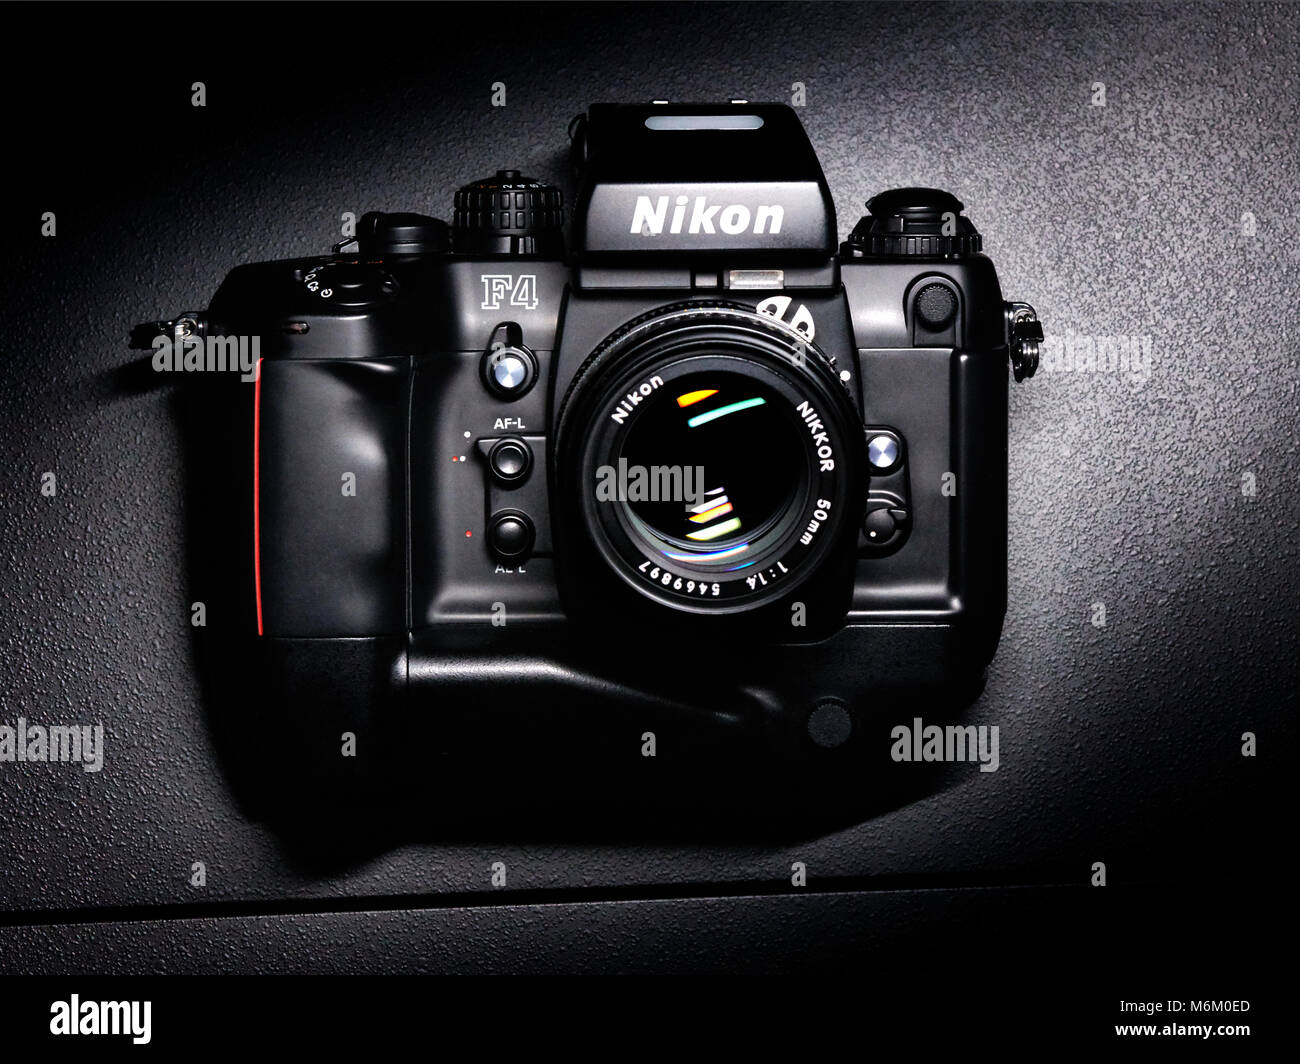 Nikon F4 analog camera with battery grip Stock Photo